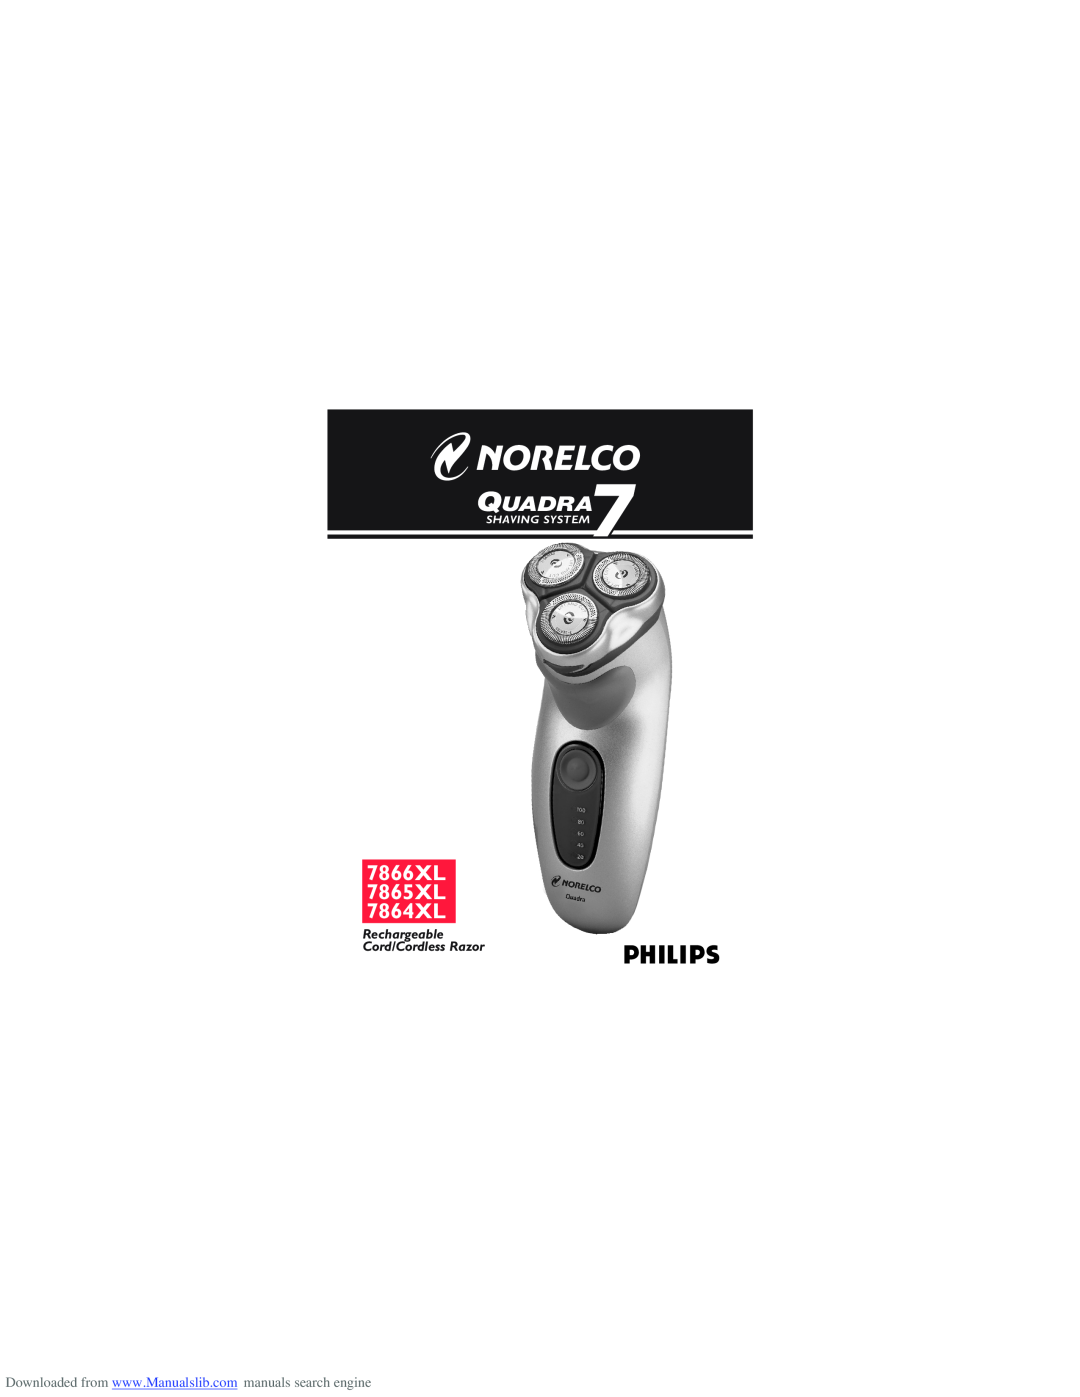 Philips manual QUADRA7, 7866XL 7865XL 7864XL, Rechargeable Cord/Cordless Razor, Shaving System 